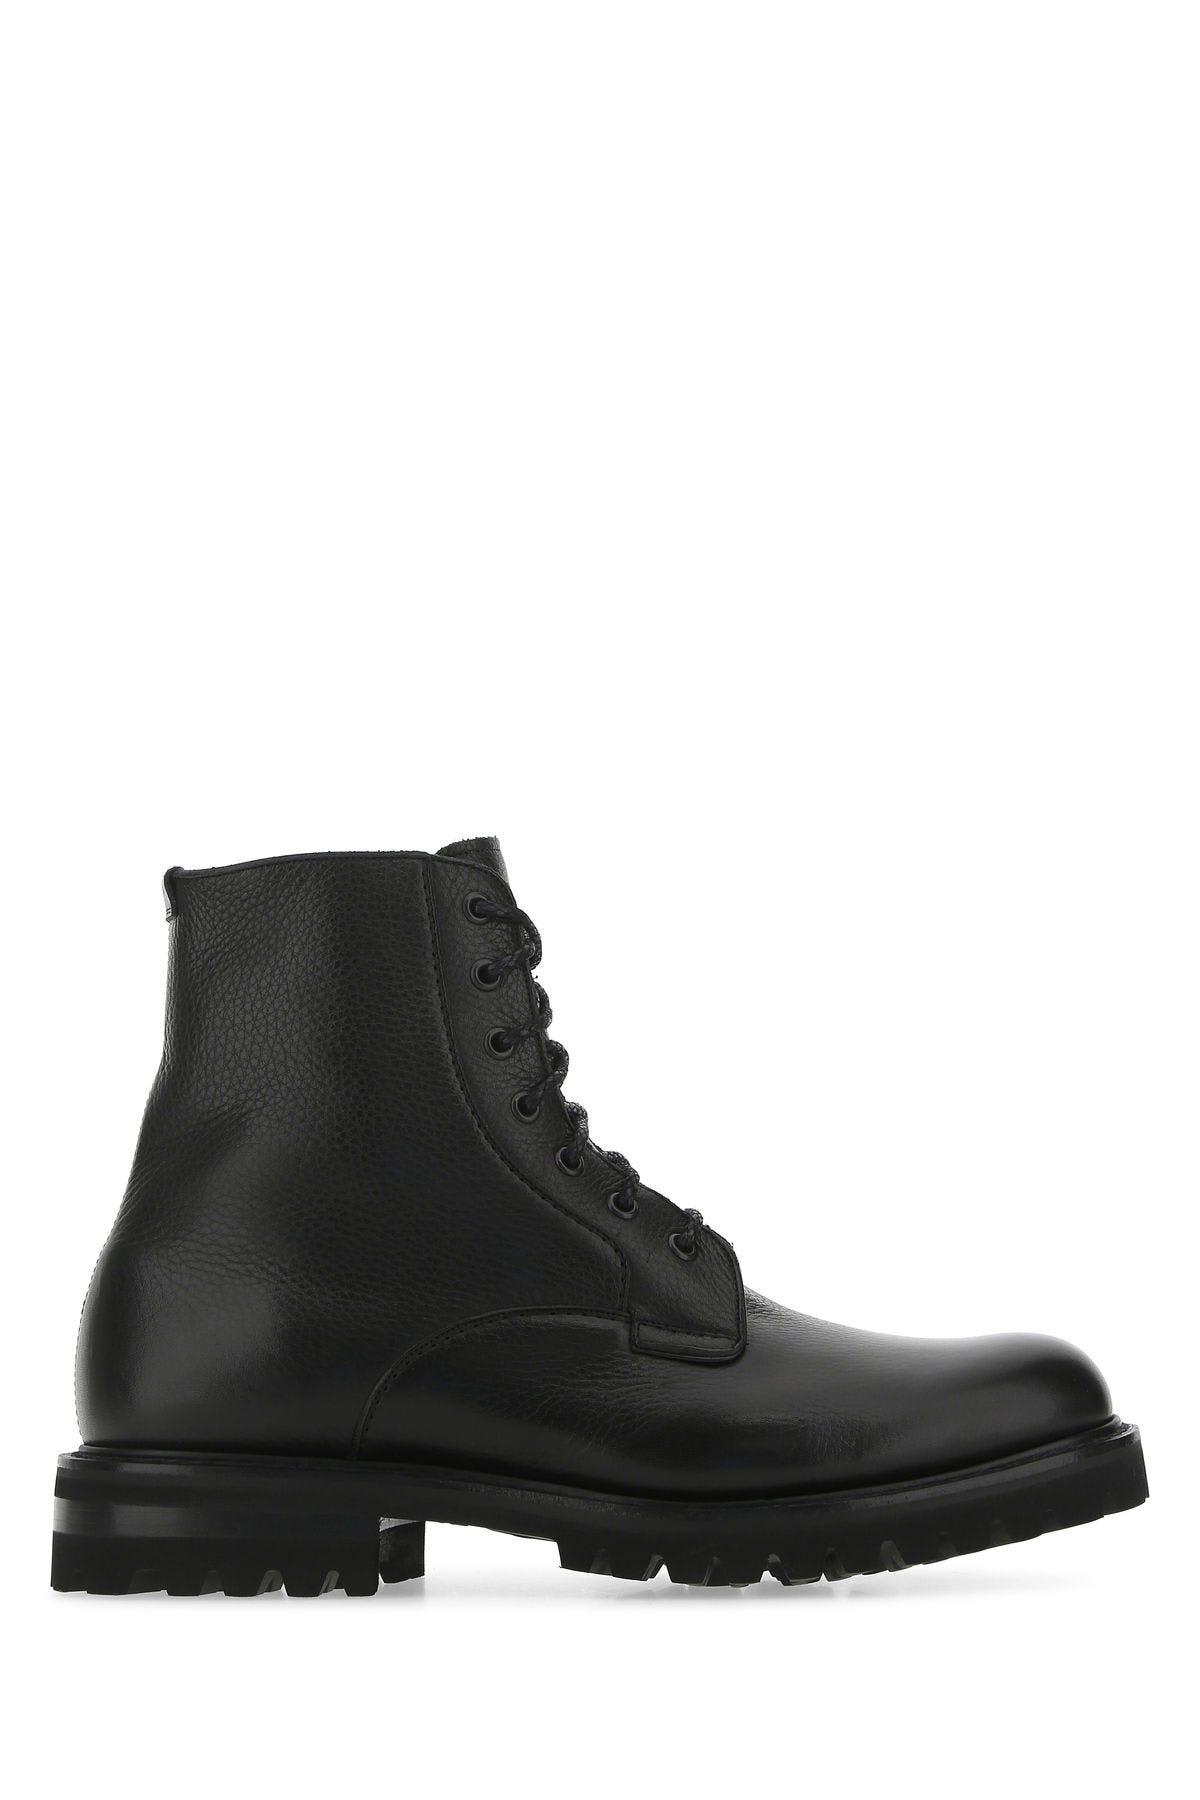 Black Leather Coalport 2 Ankle Boots